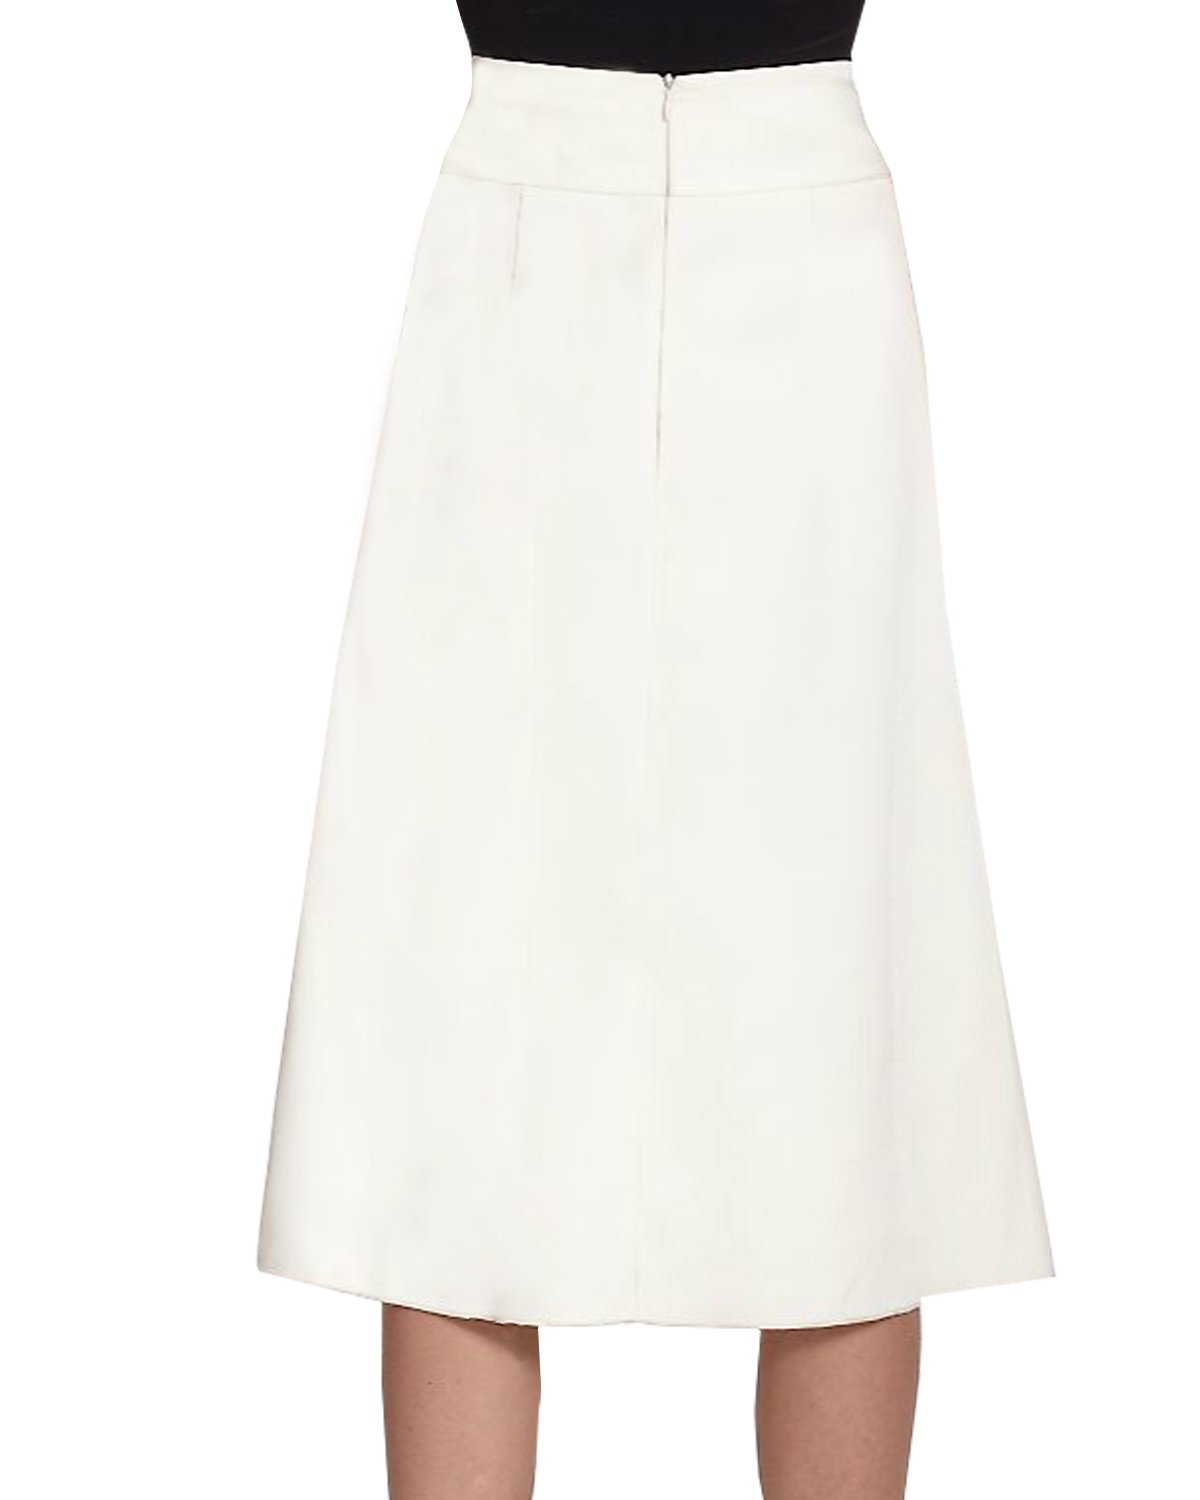 High Waist A-Line Skirt with Box Pleat – Elizabeth's Custom Skirts